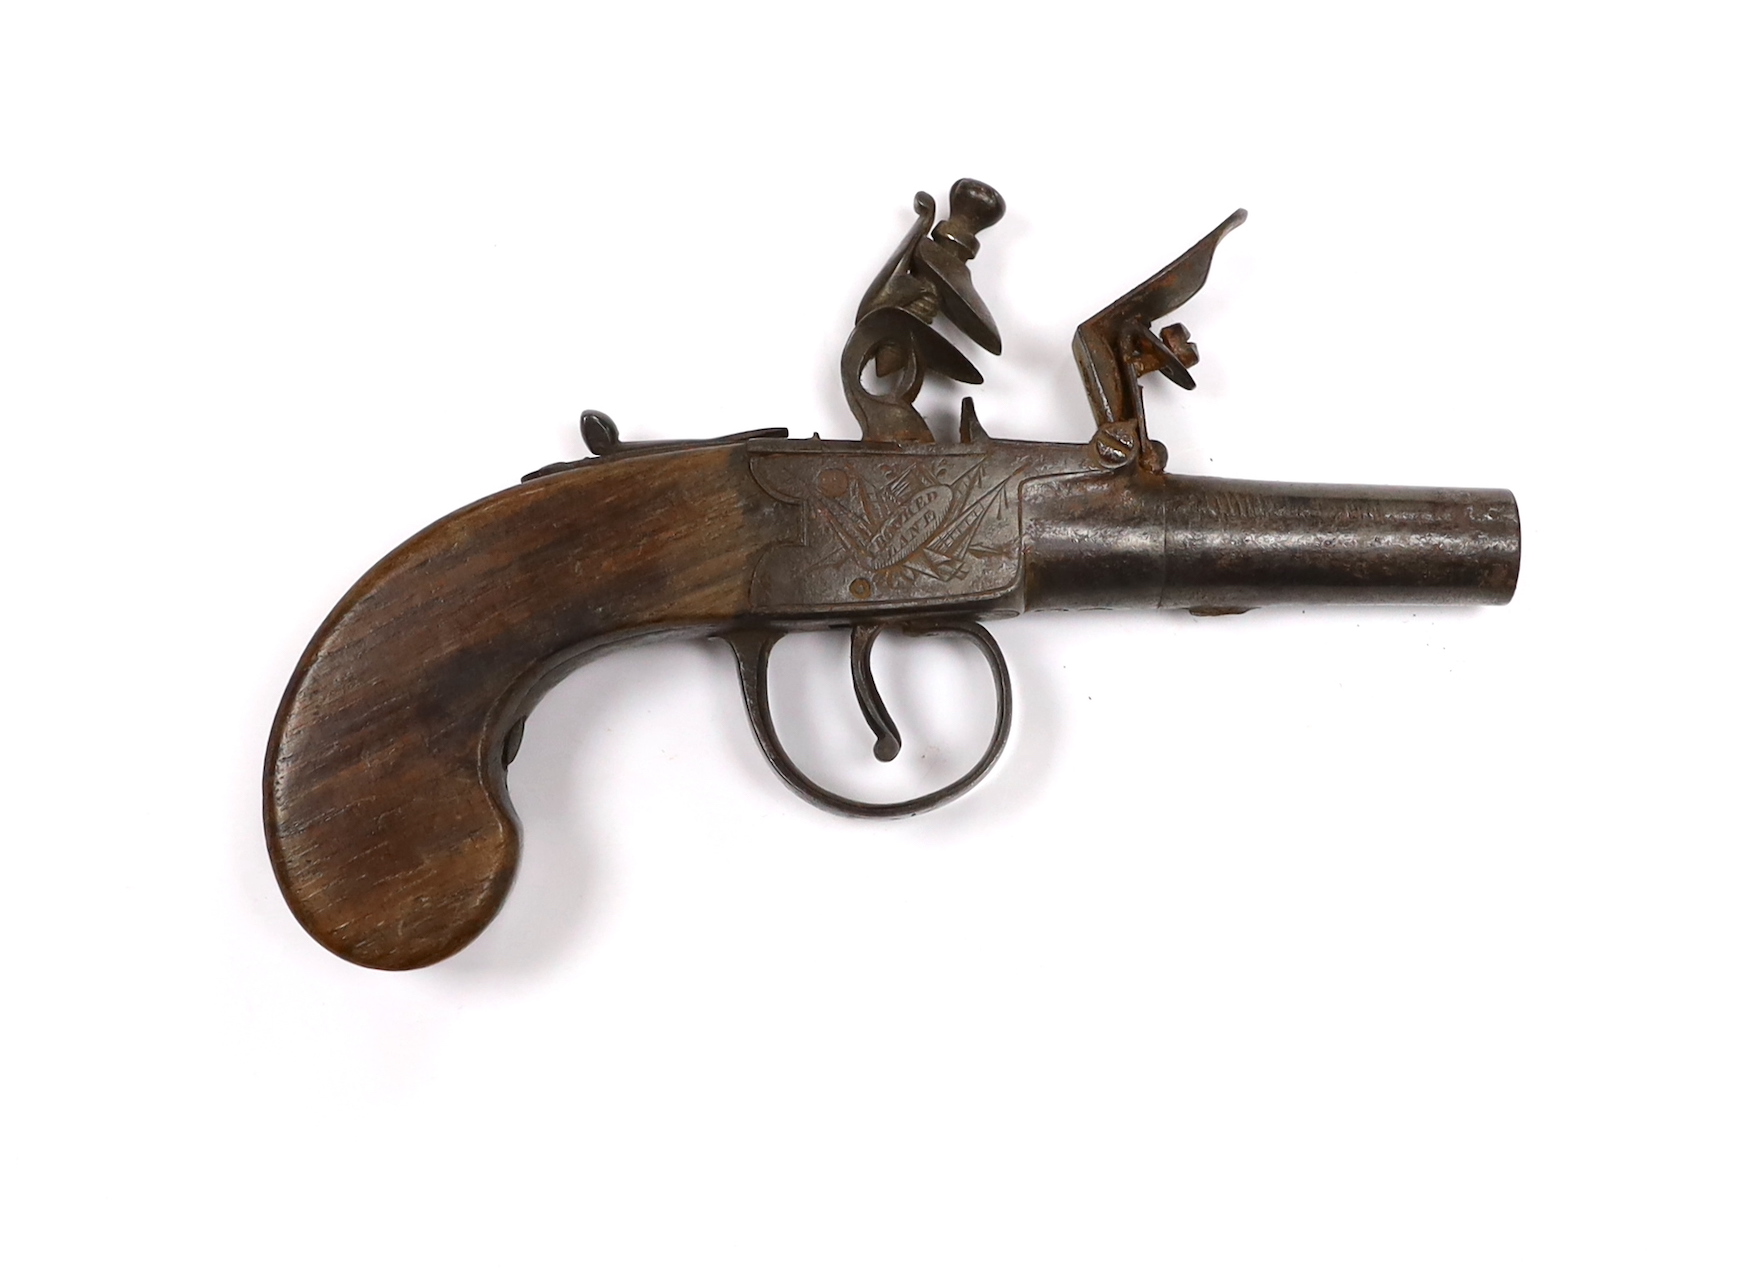 A flintlock pocket pistol, c.1830, frame engraved with trophies of flags, maker Stevens, Crooked Lane